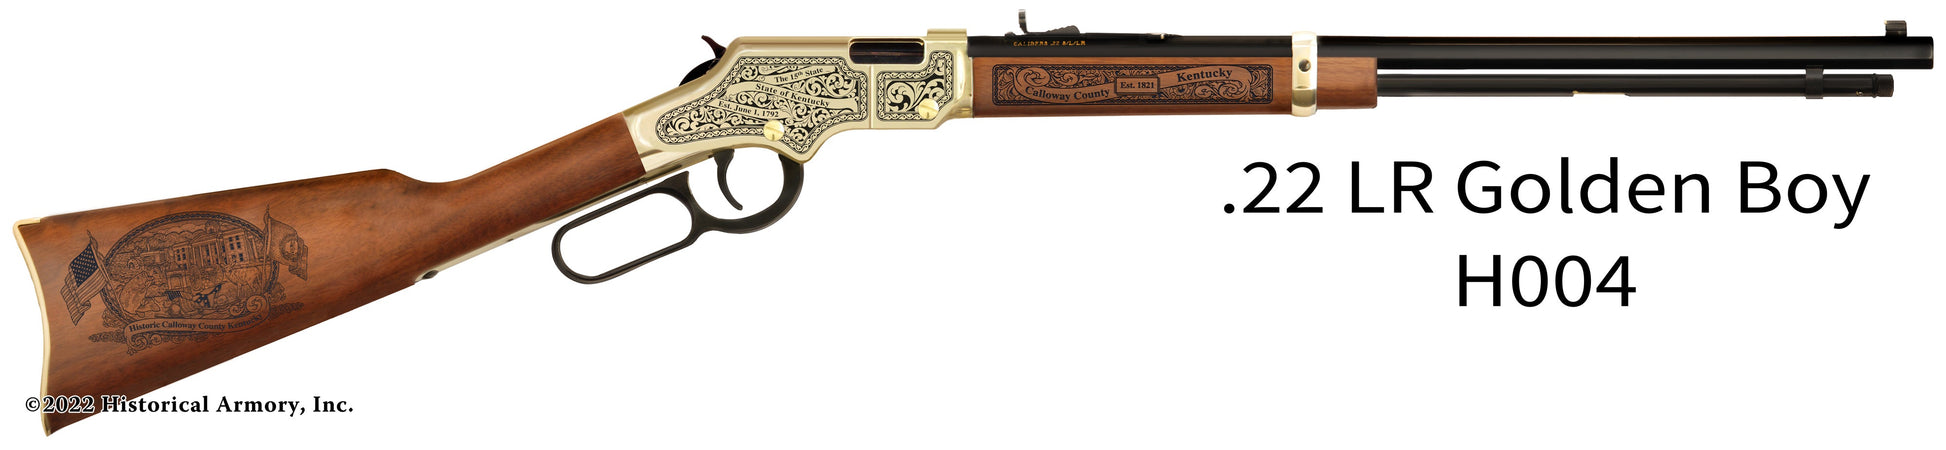 Calloway County Kentucky Engraved Henry Golden Boy Rifle